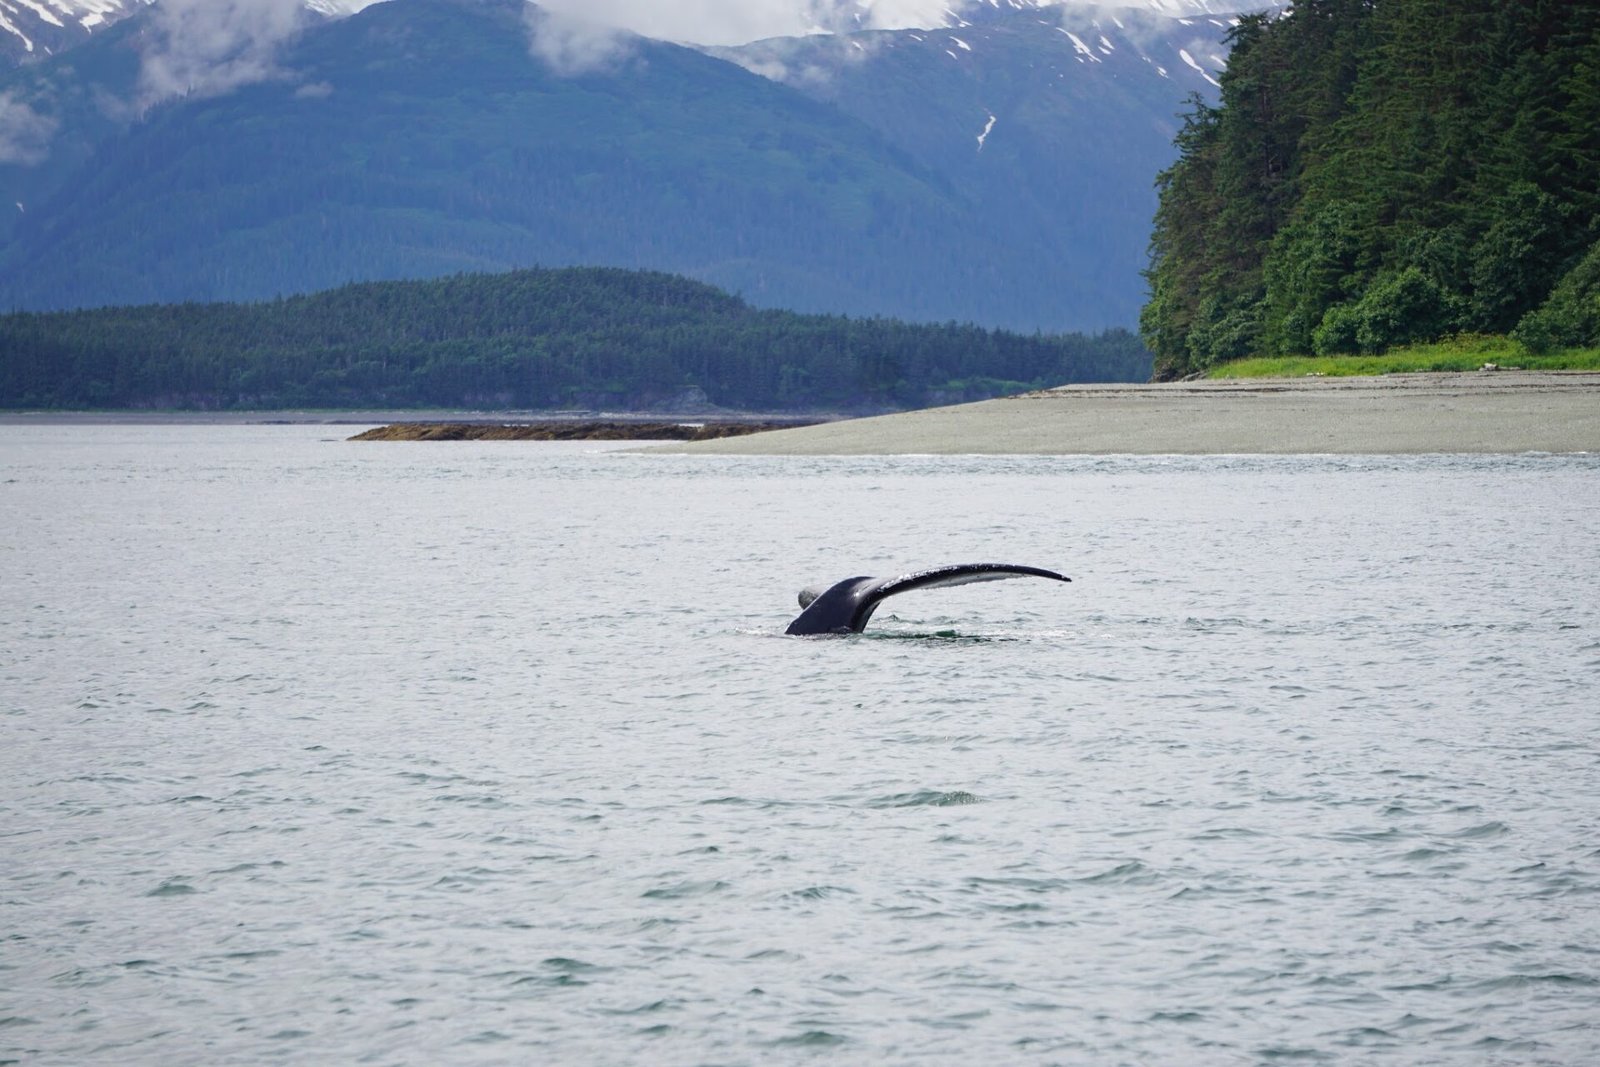 Humpback whale, Juneau, Alaska